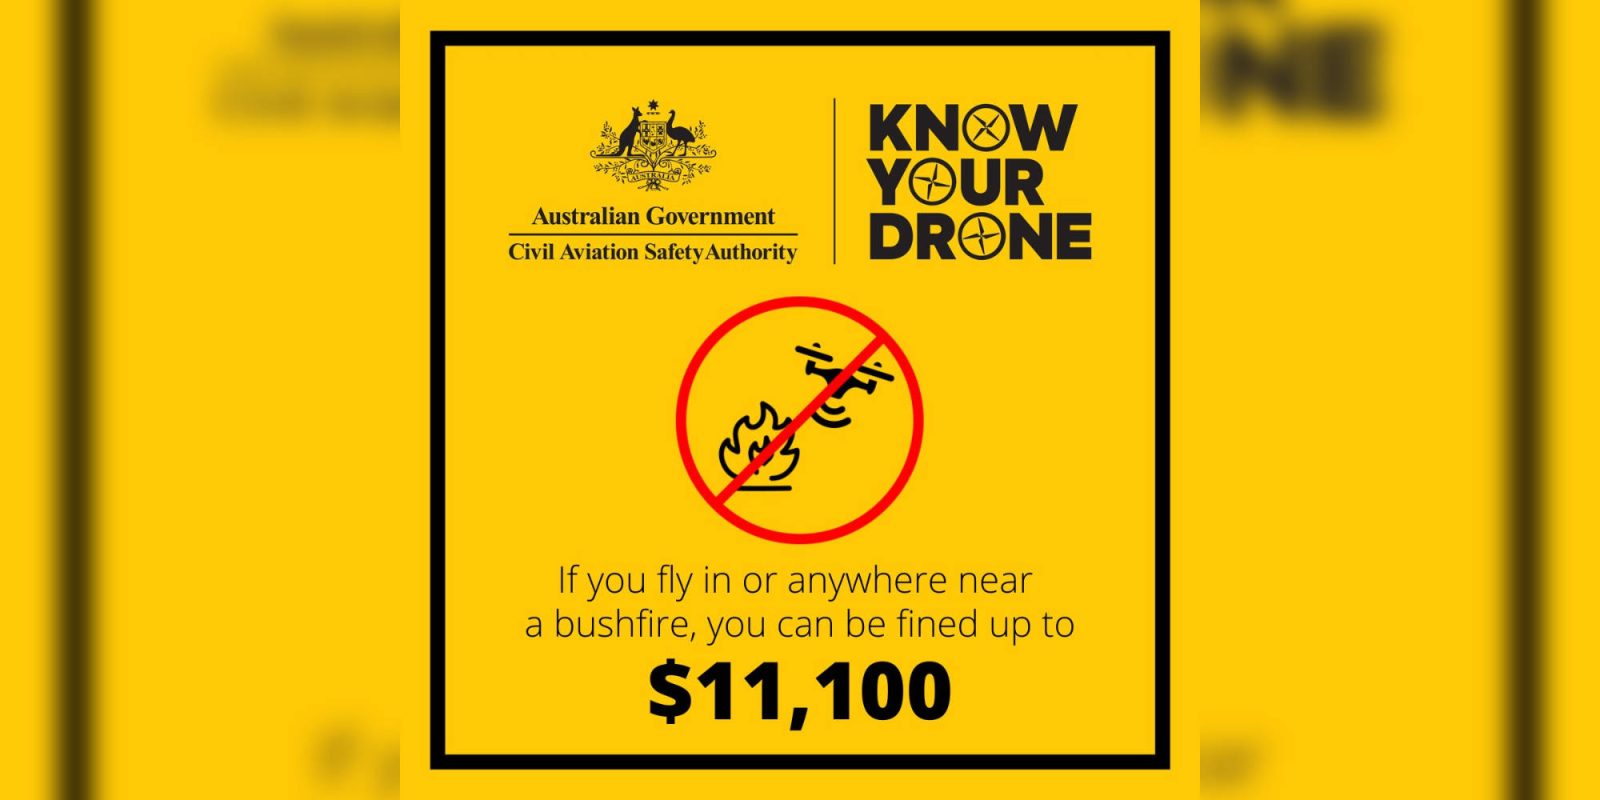 Don't fly drone bushfires